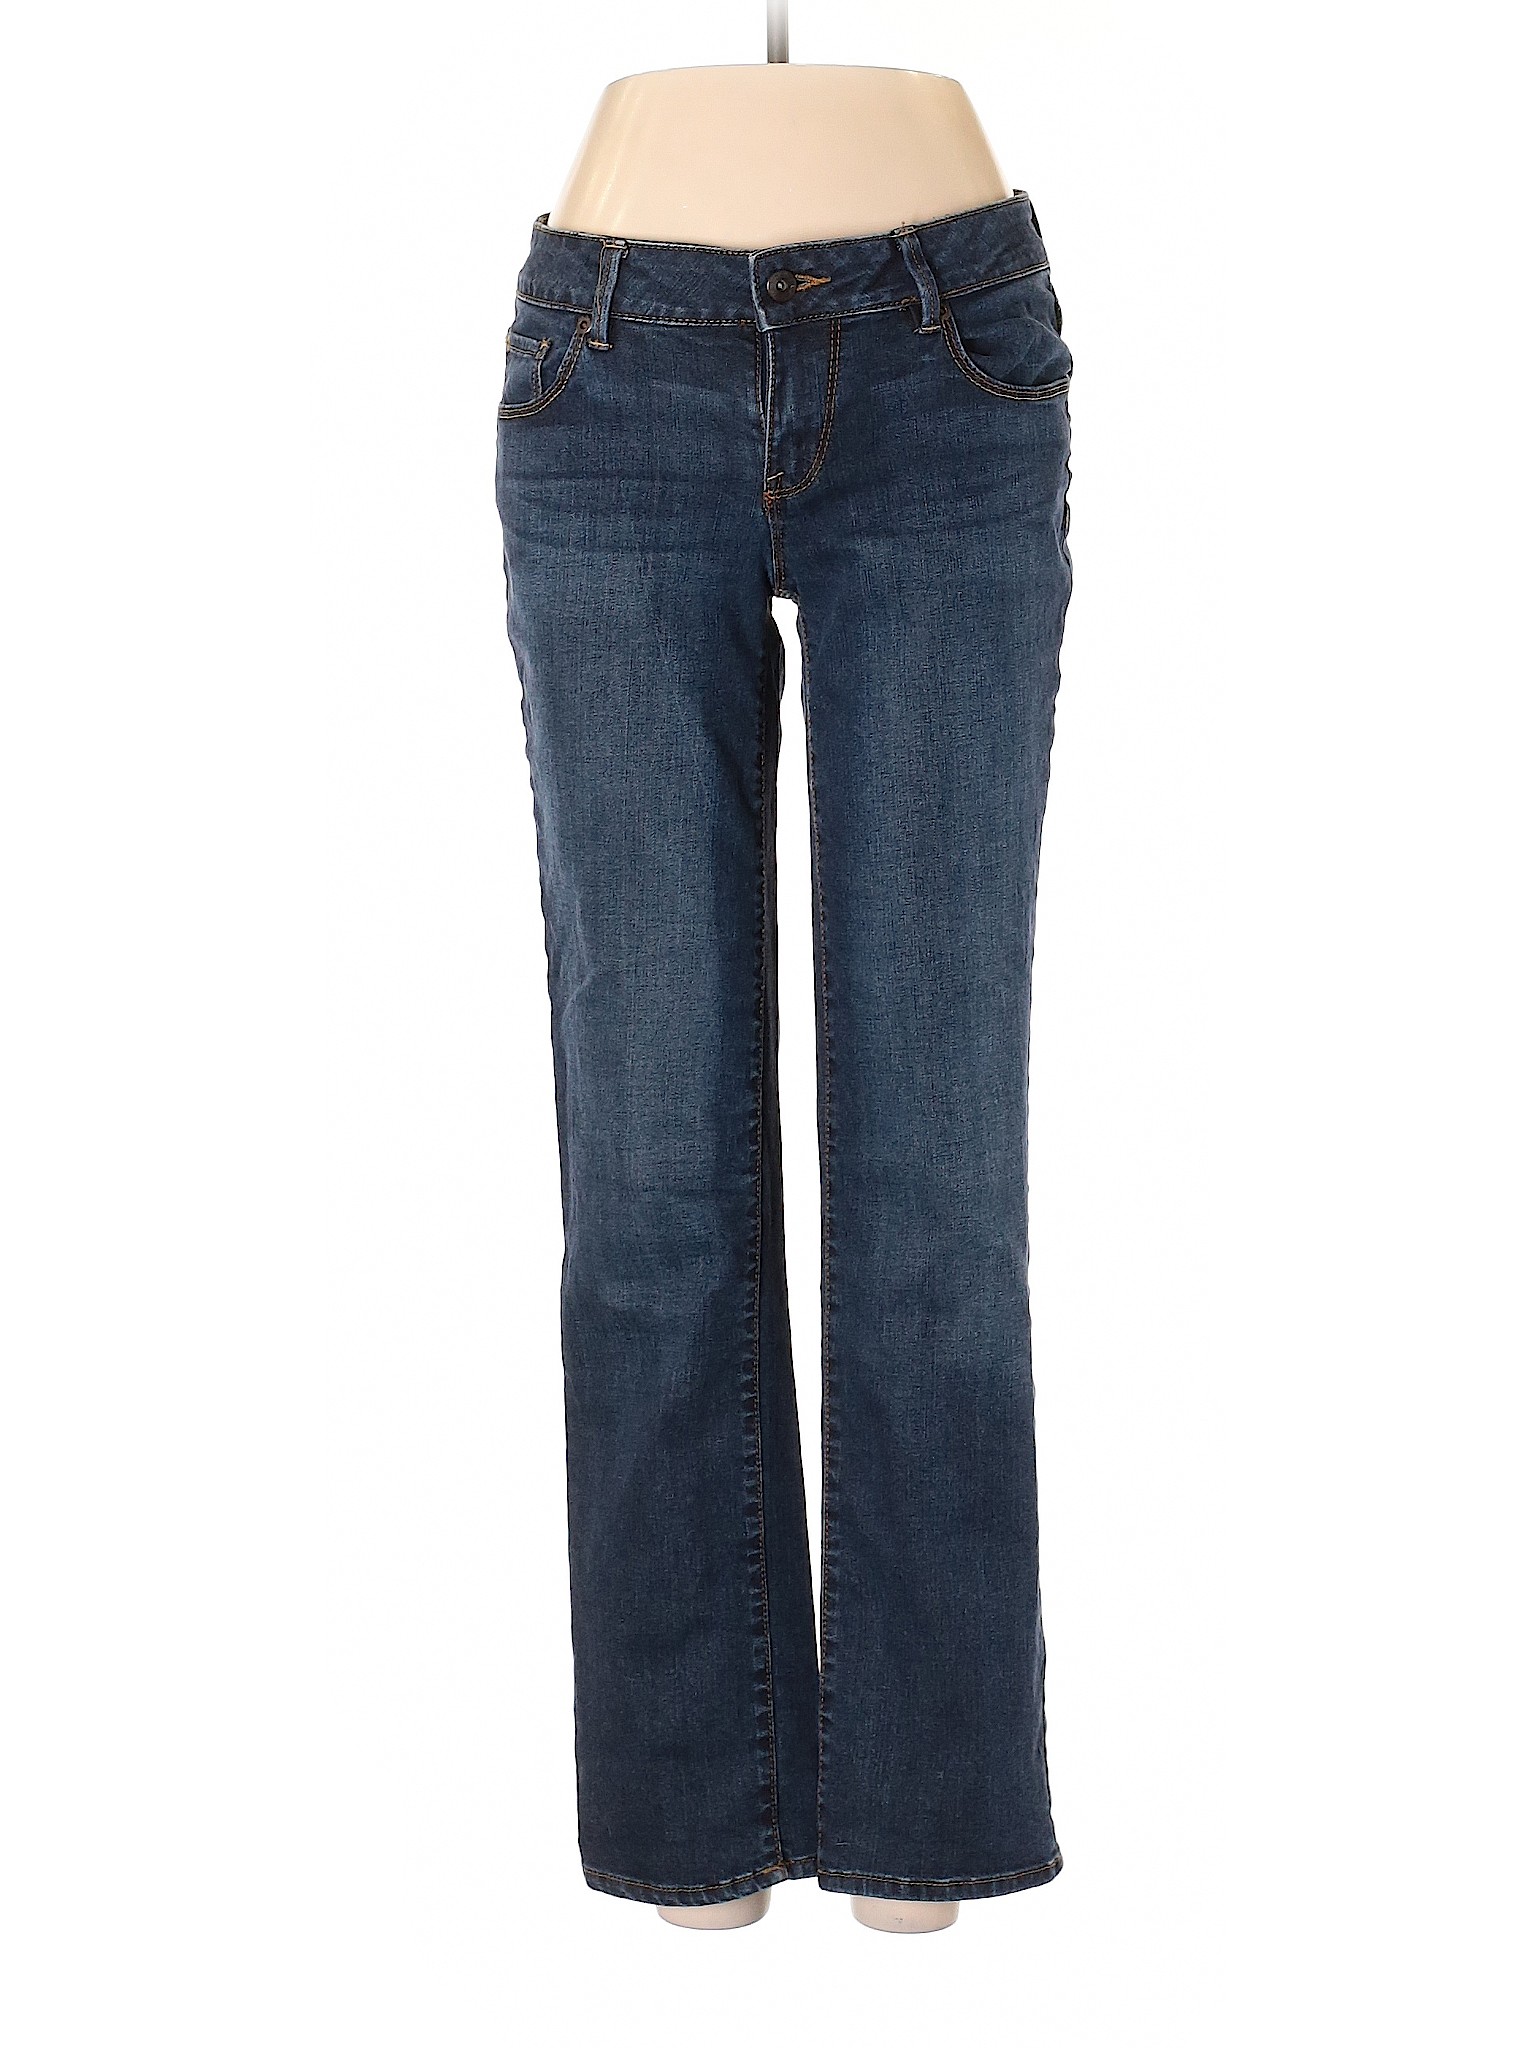 Sonoma Jeans Size Chart